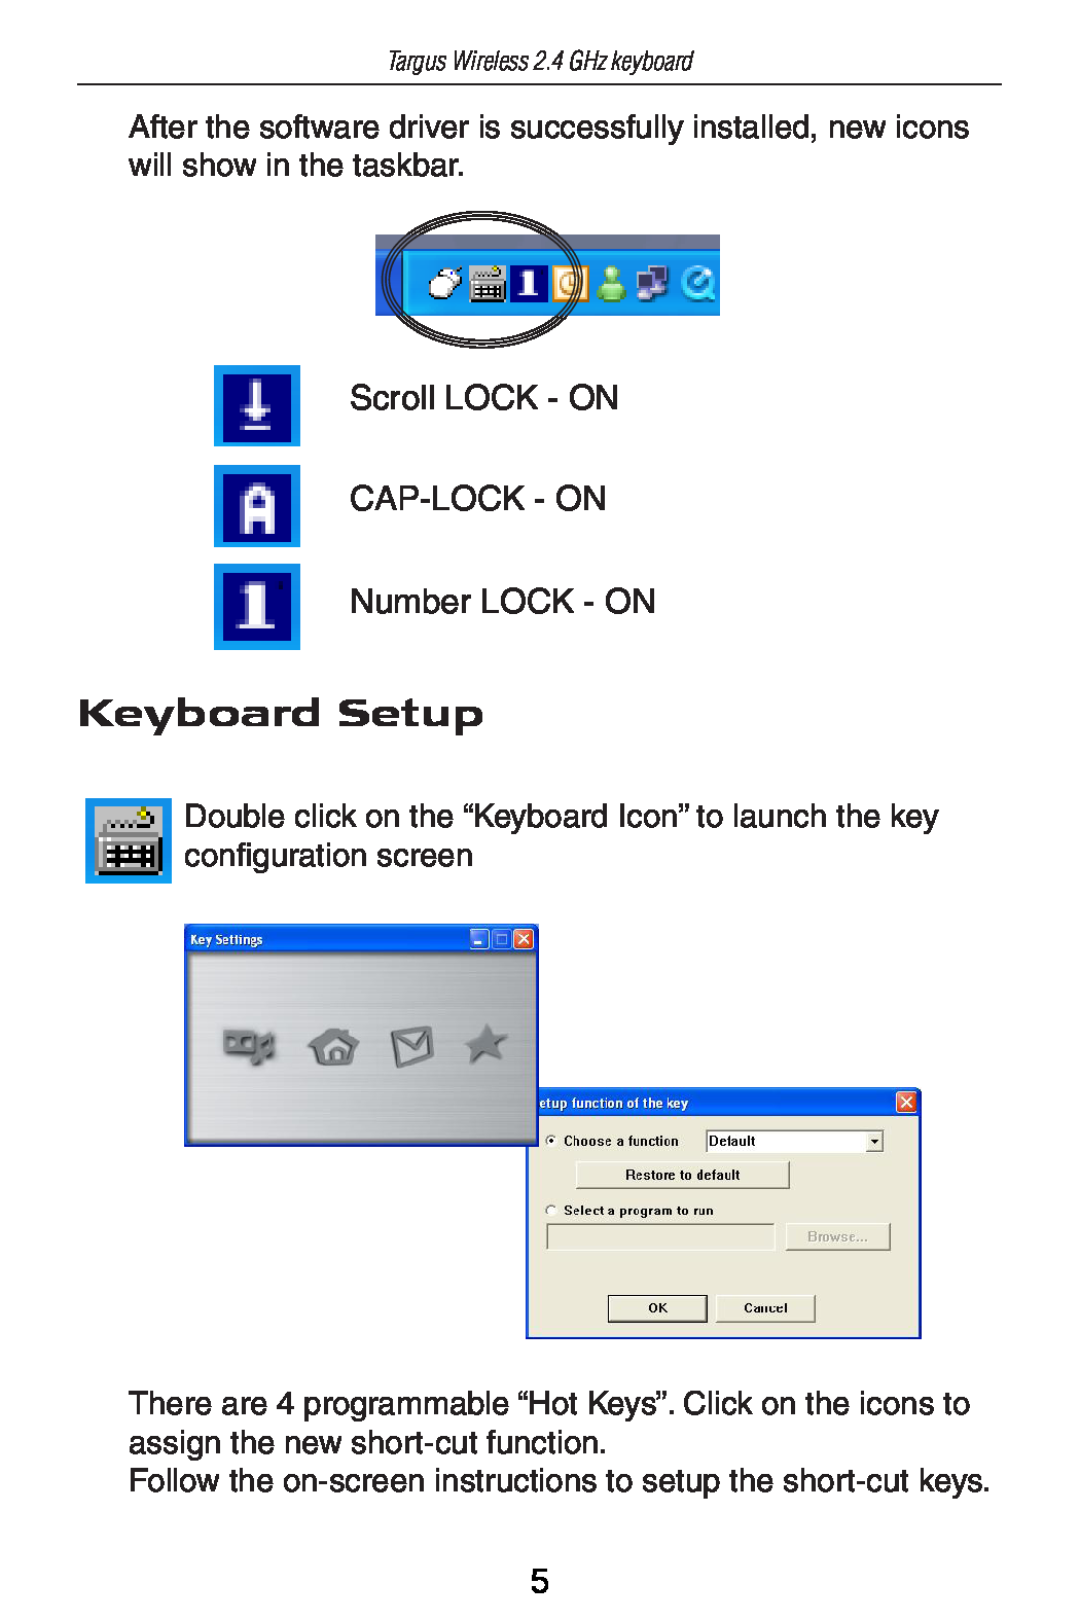 Targus AKB24US specifications Keyboard Setup, Scroll LOCK - ON CAP-LOCK - ON Number LOCK - ON 